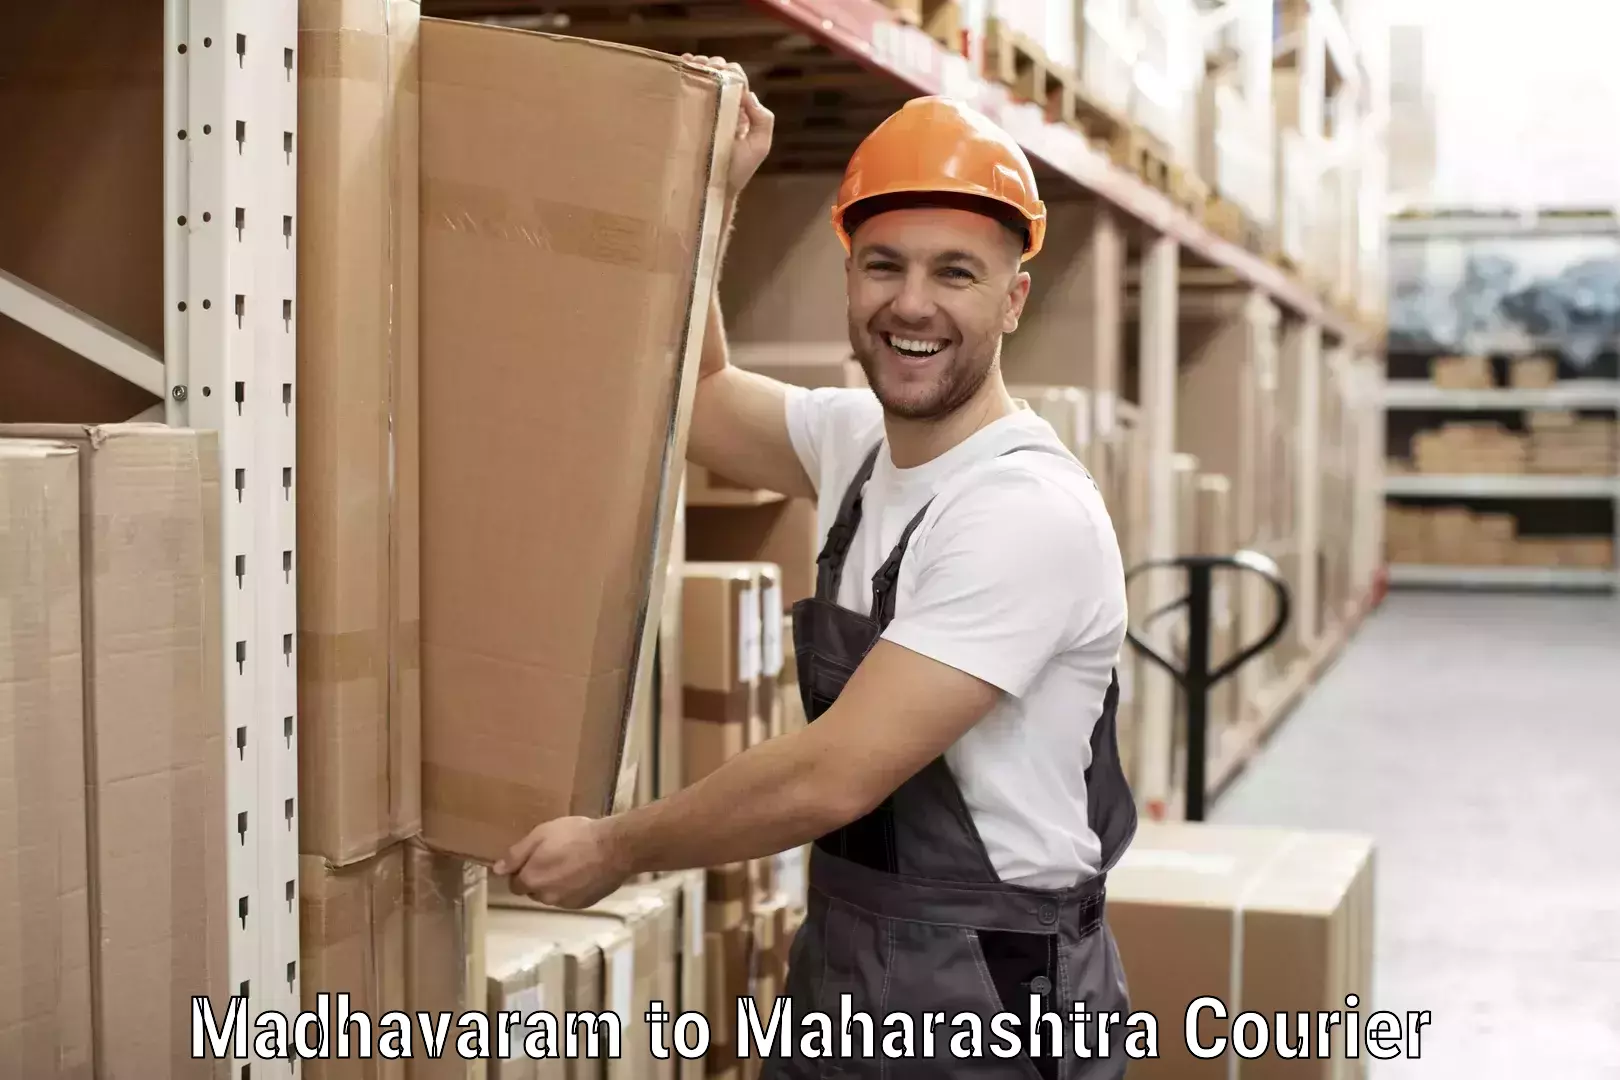 Courier service partnerships Madhavaram to Indapur